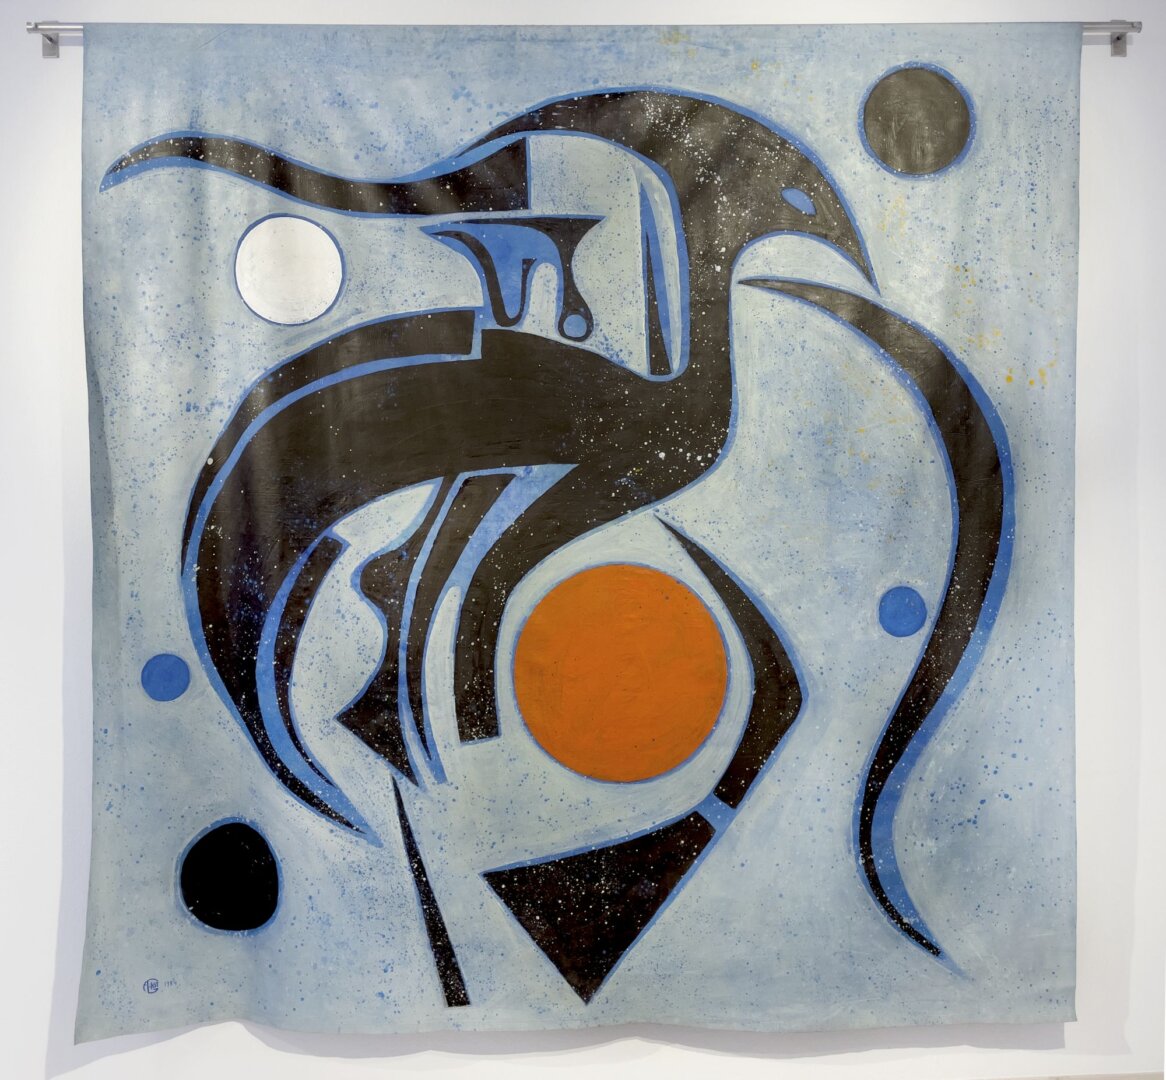 Francoise Gilot: Tűzmadár, 1984, akril, vászon - lebegő festmény, 270x269 cm, magántulajdon, Várfok Galéria